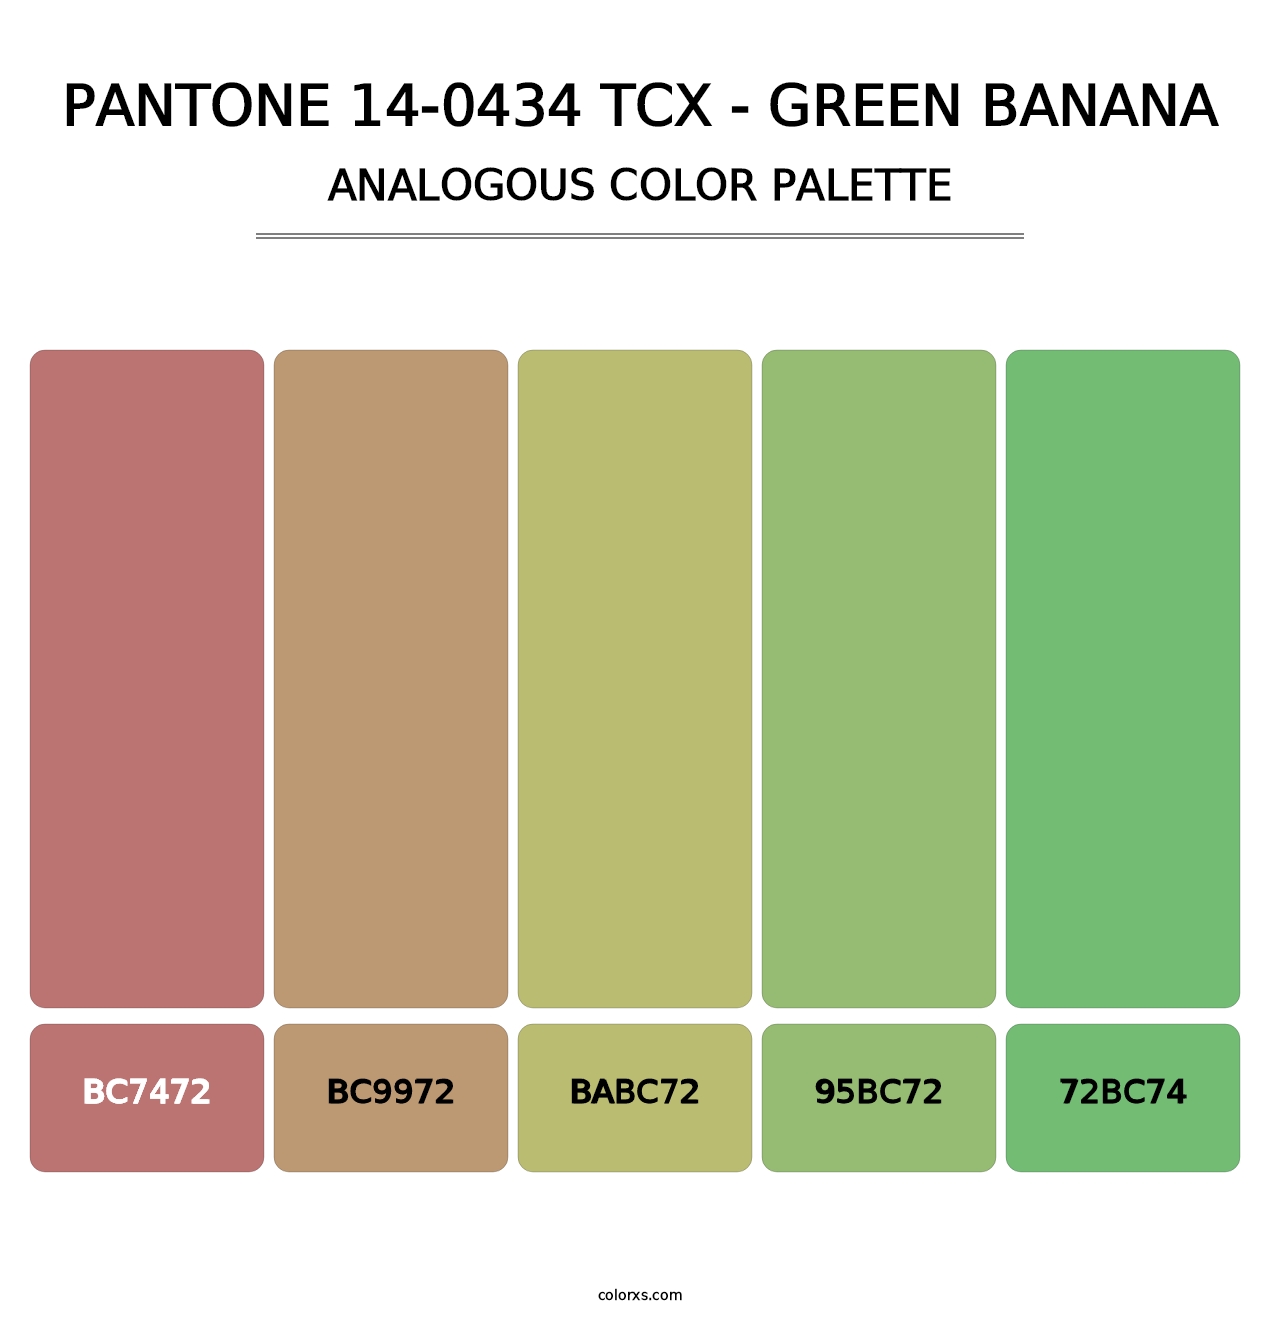 PANTONE 14-0434 TCX - Green Banana - Analogous Color Palette